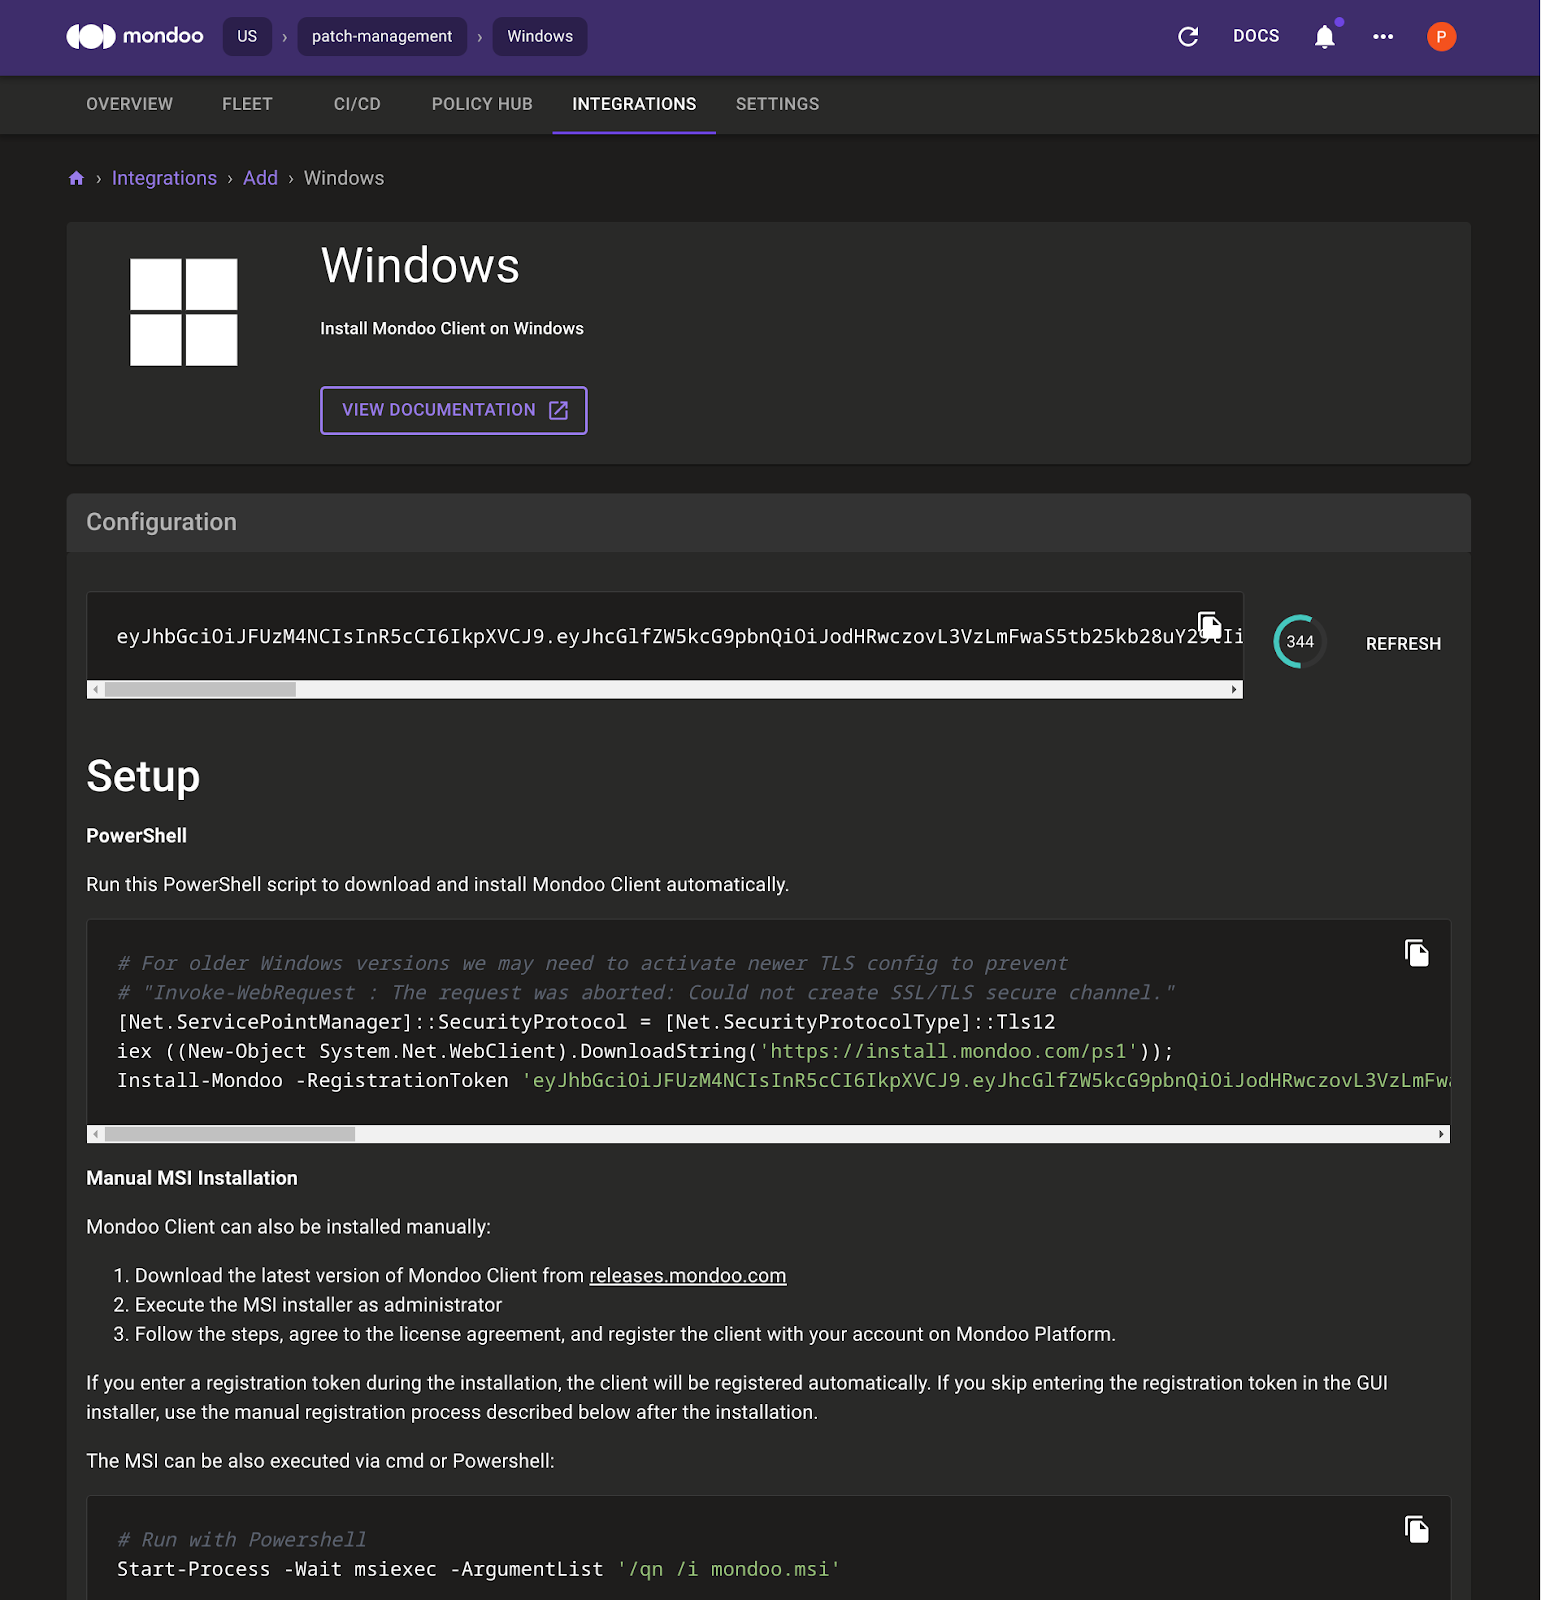 windows integration page mondoo-1